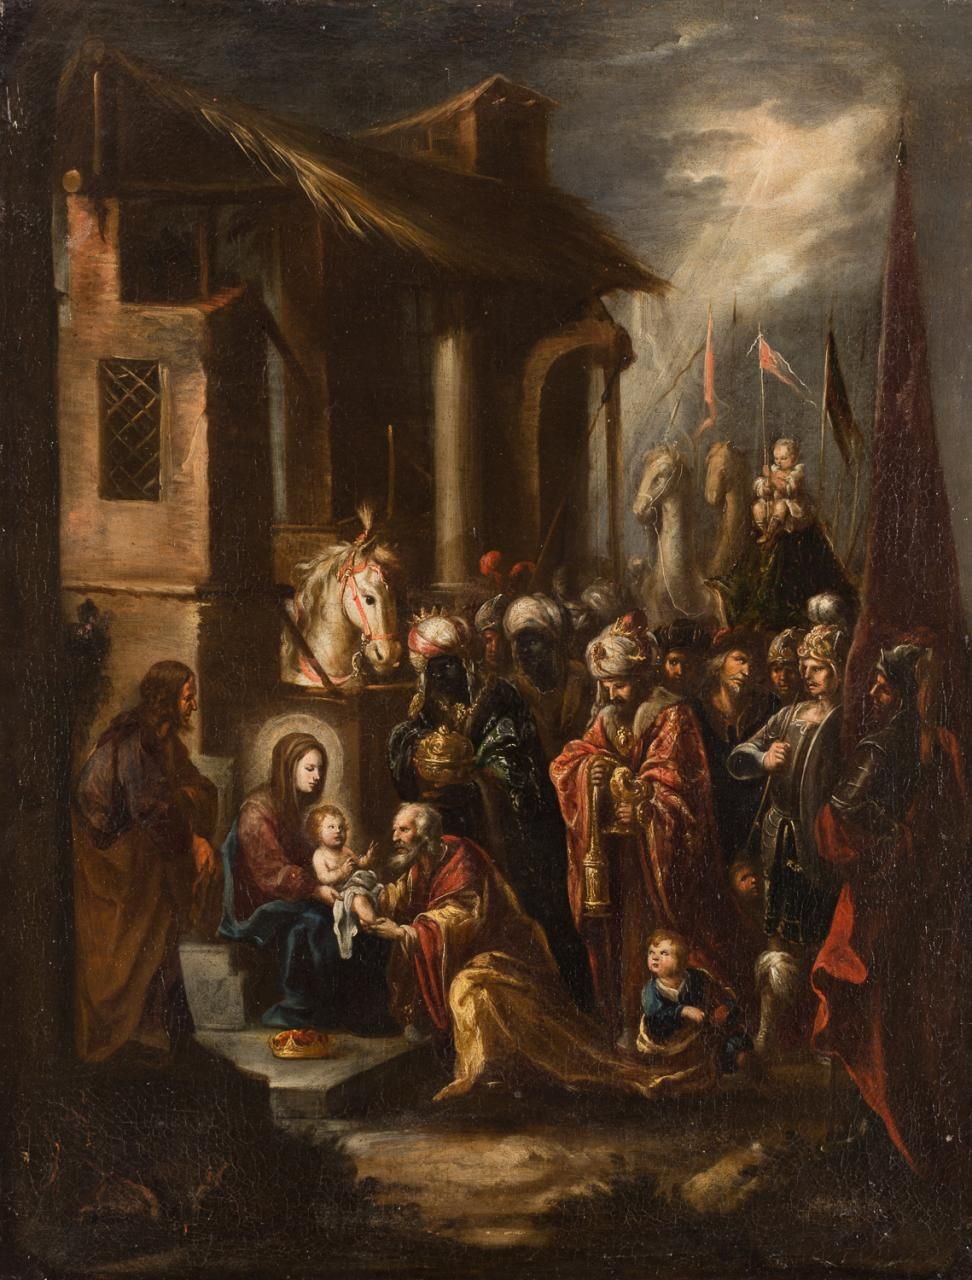 ESCUELA FLAMENCA, S. XVII "主显节 "和 "牧羊人的崇拜"
布面油画
72 x 55,5 cm